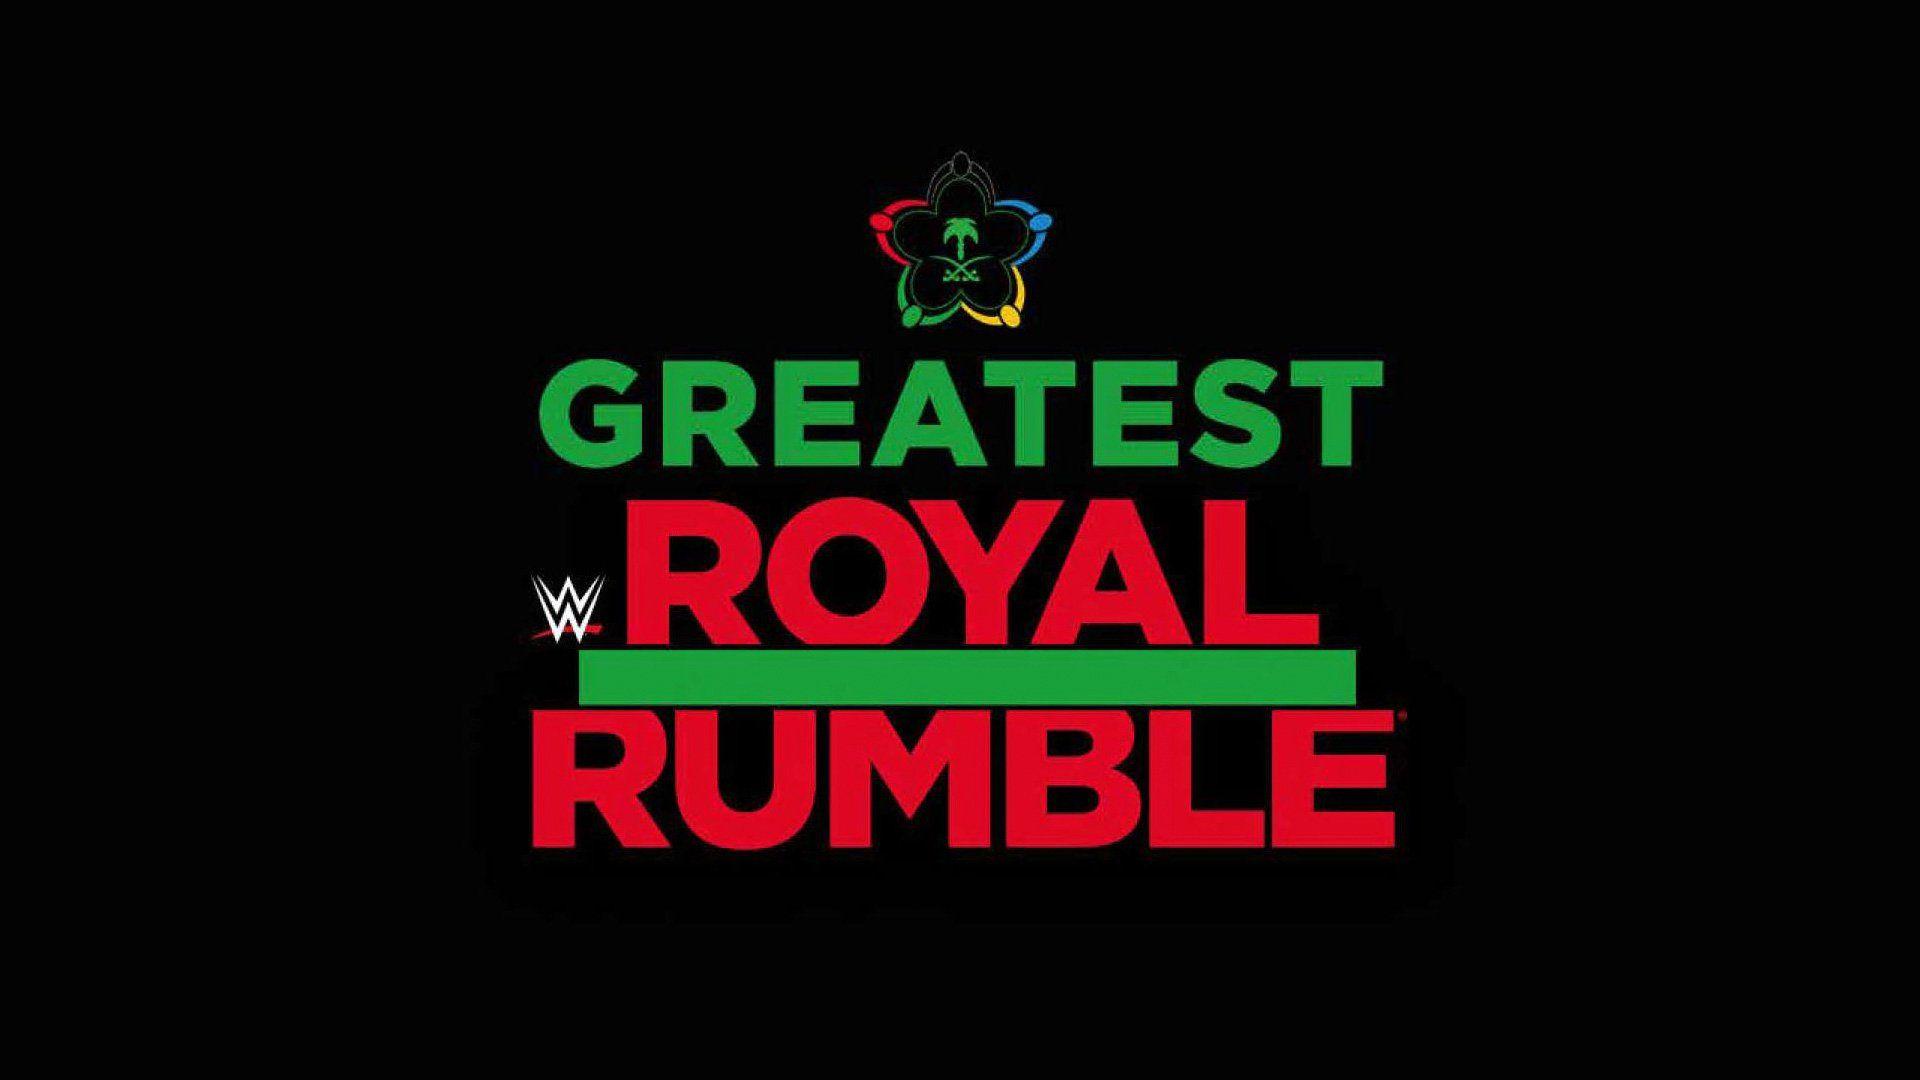 Saudi Arabia to host the Greatest Royal Rumble. Big Gold Belt